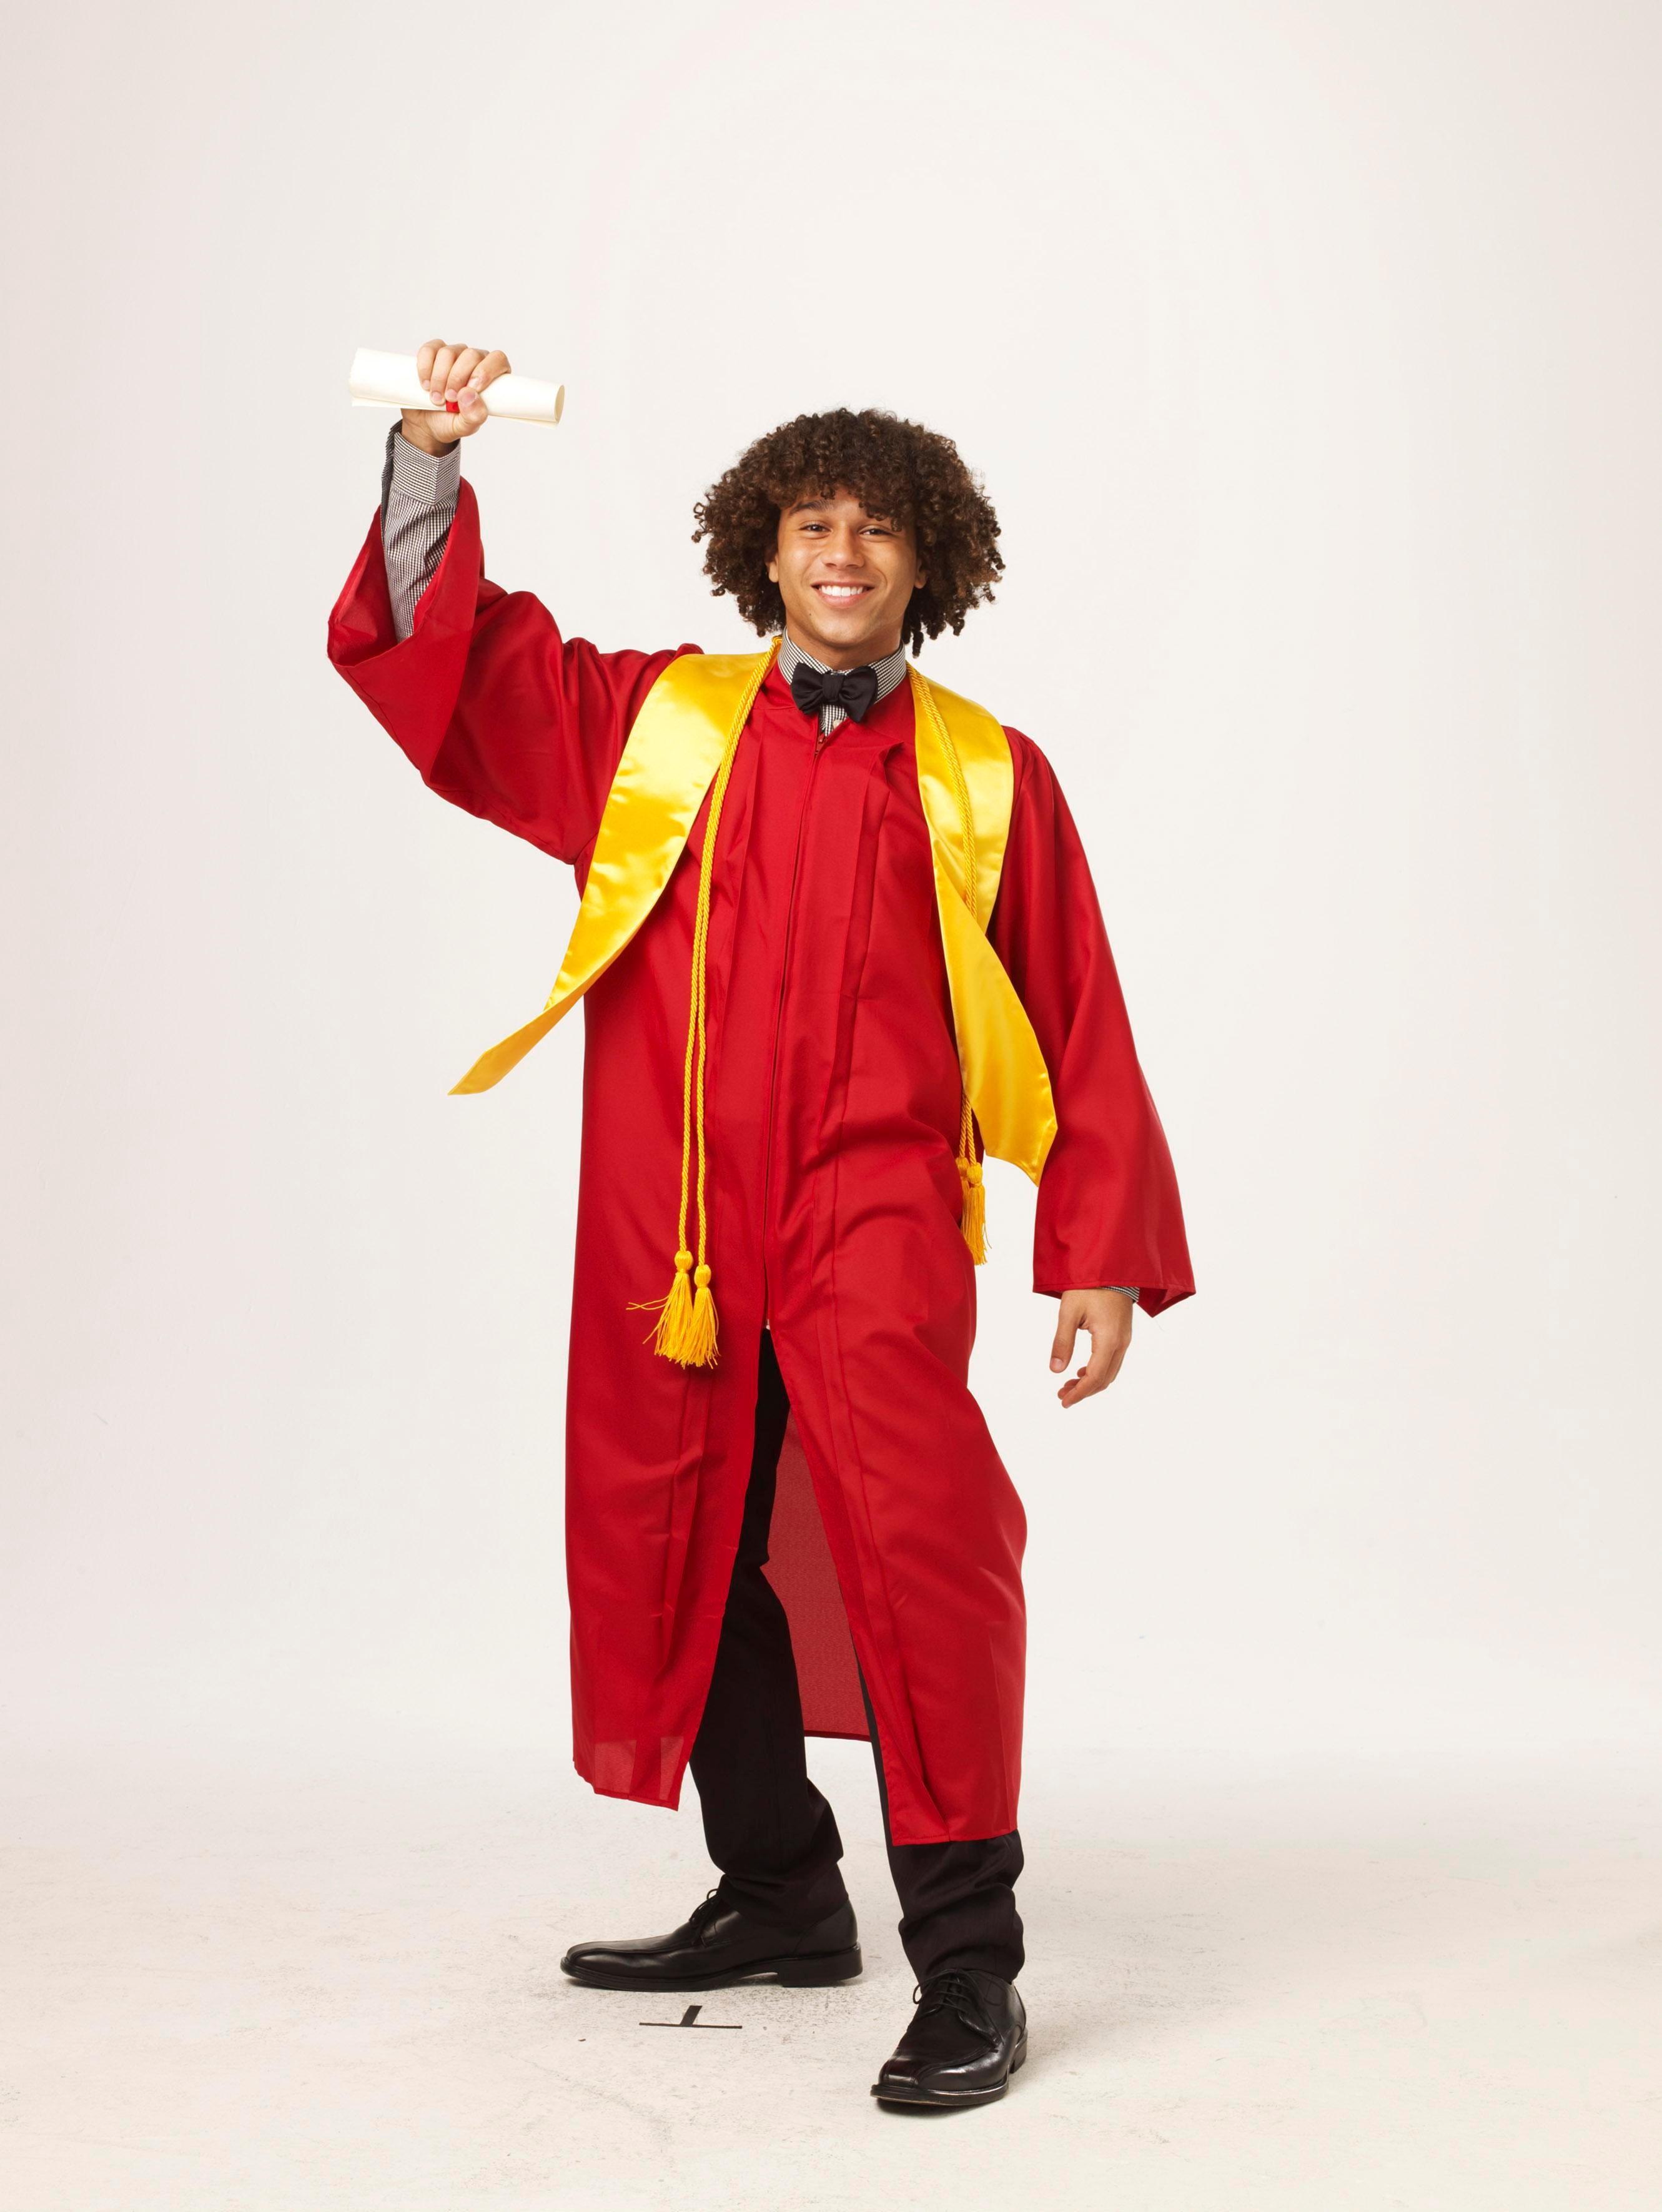 Corbin Bleu stars as Chad Danforth in Walt Disney Pictures' High School Musical 3: Senior Year (2008)